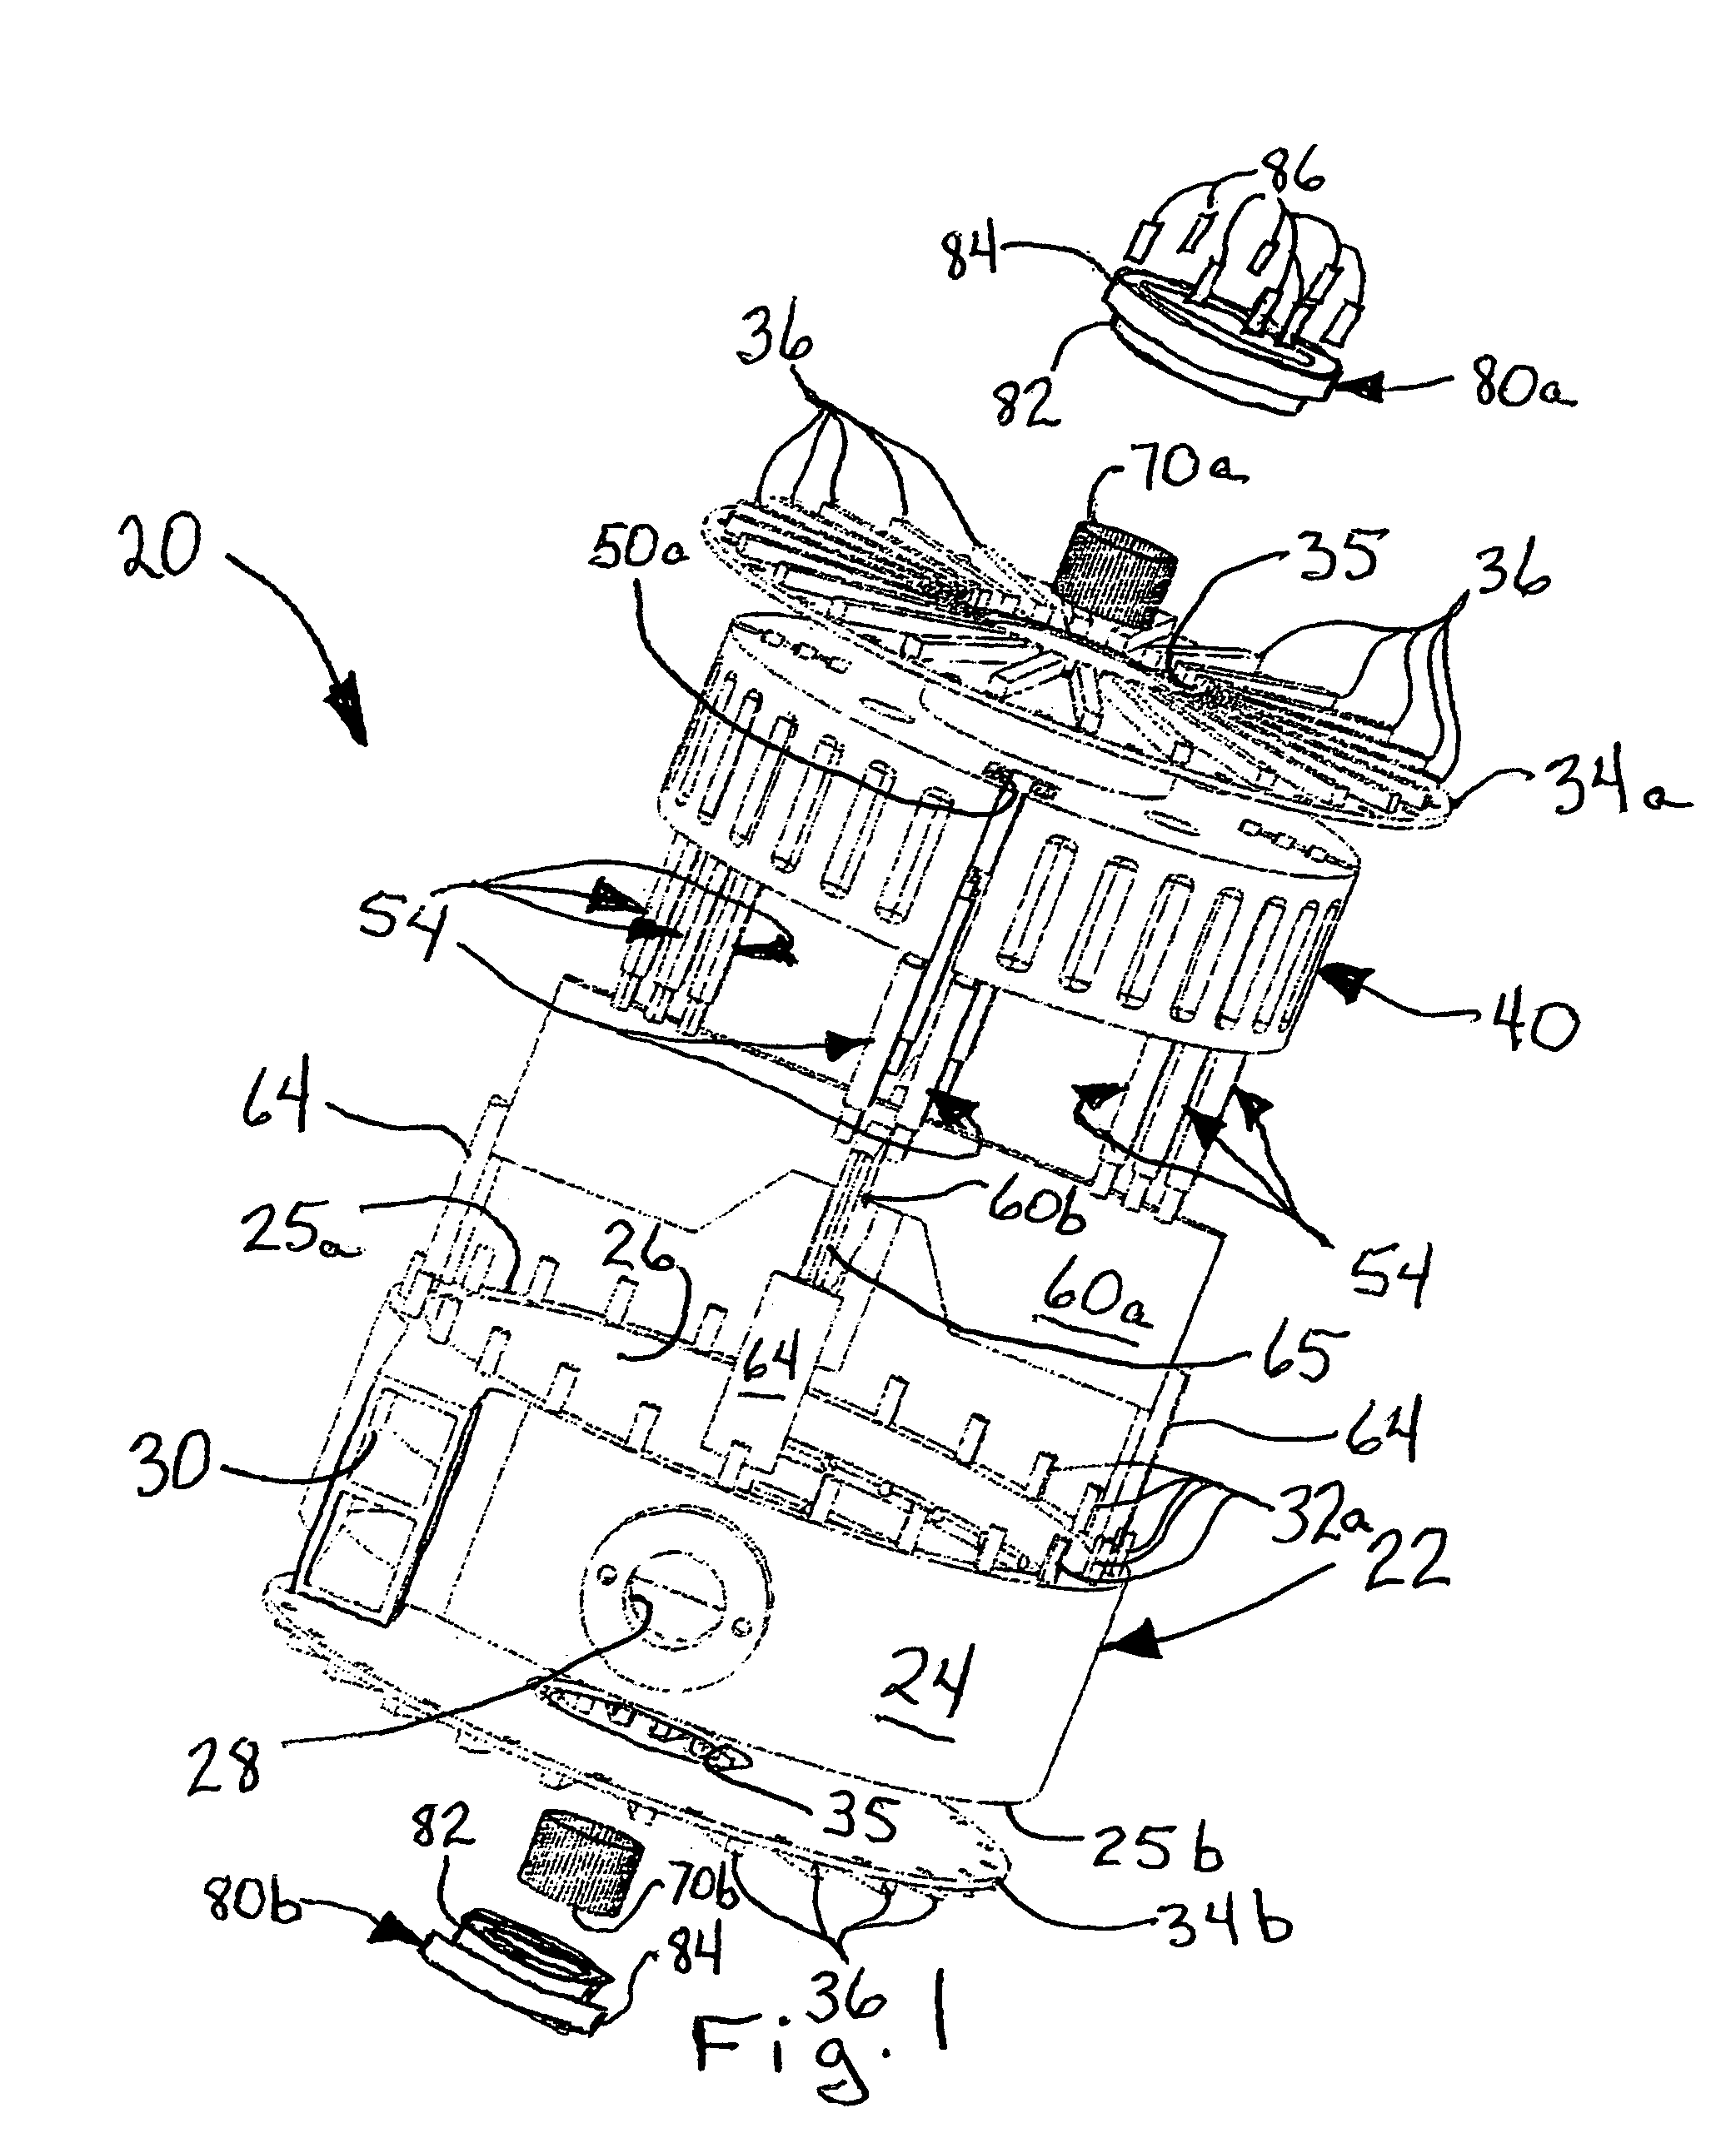 Gorski rotary engine